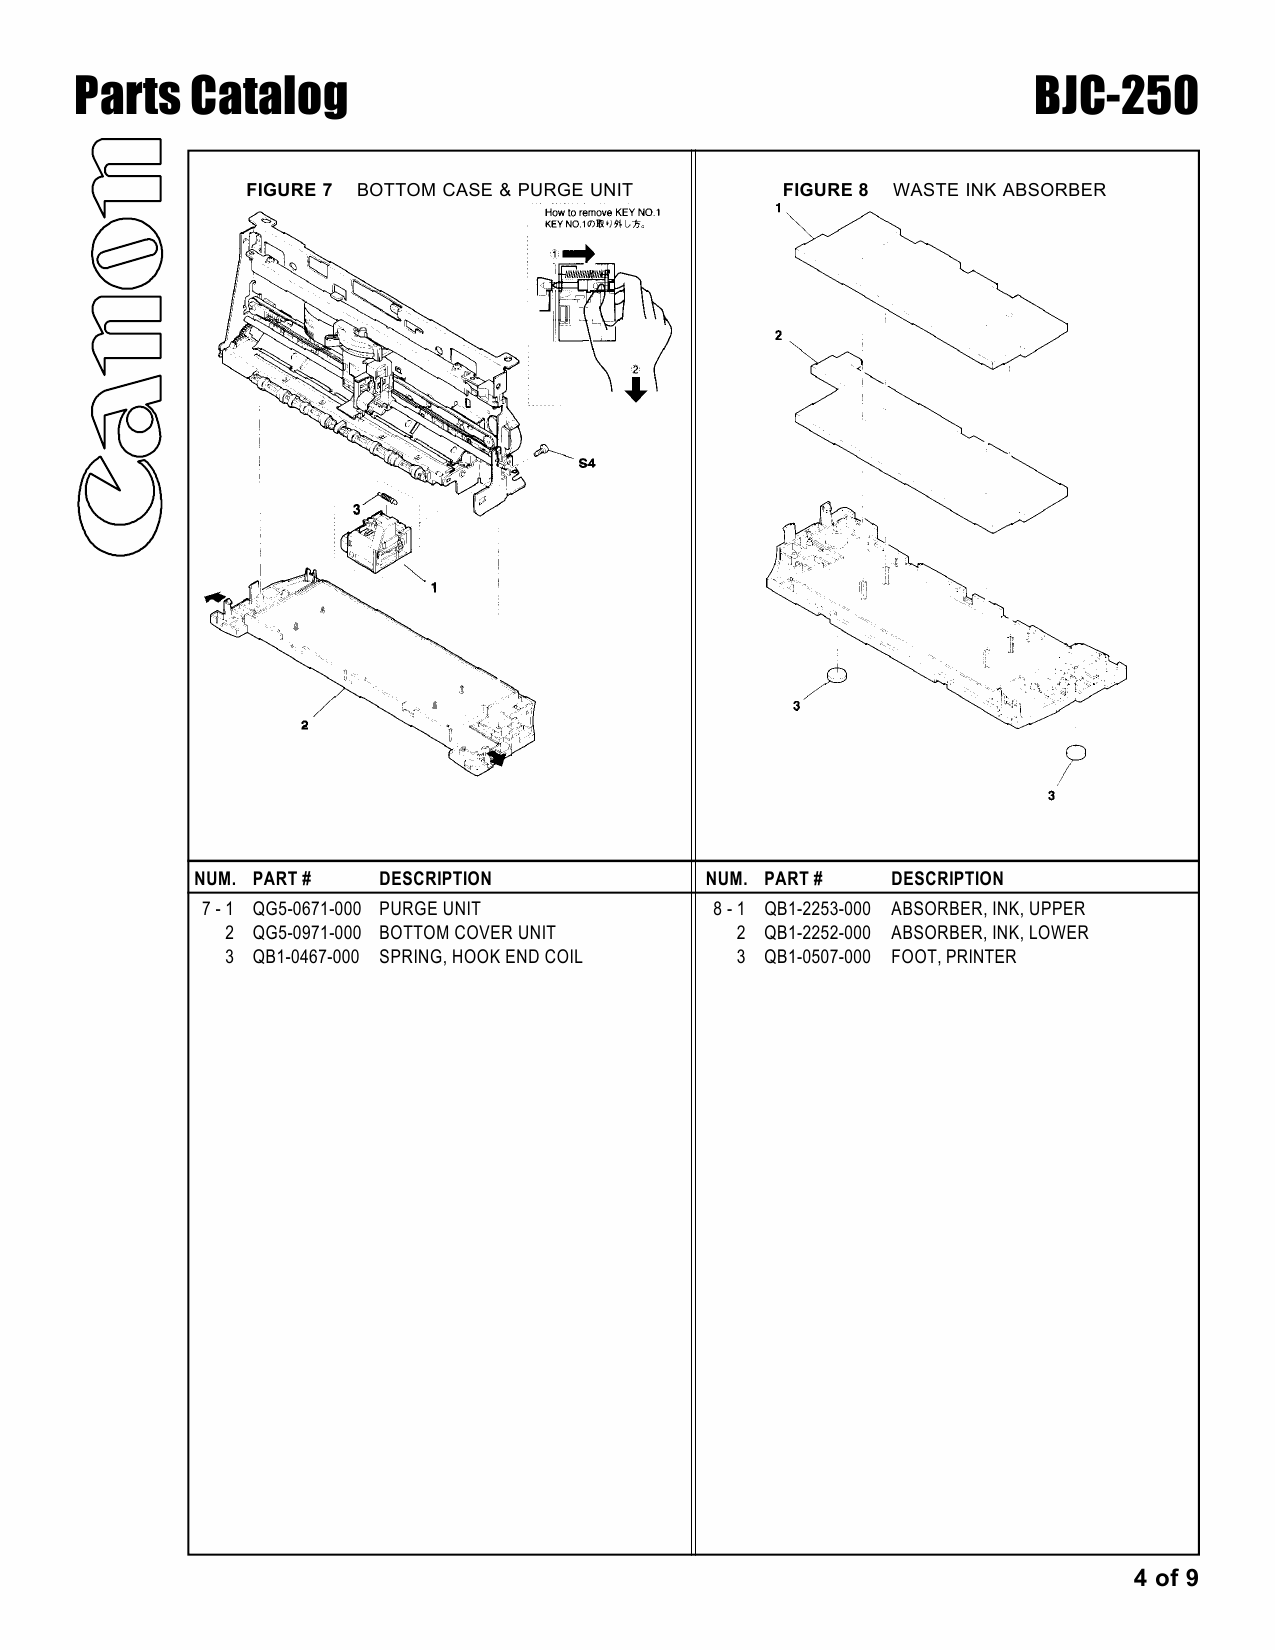 Canon BubbleJet BJC-250 Parts Catalog Manual-4